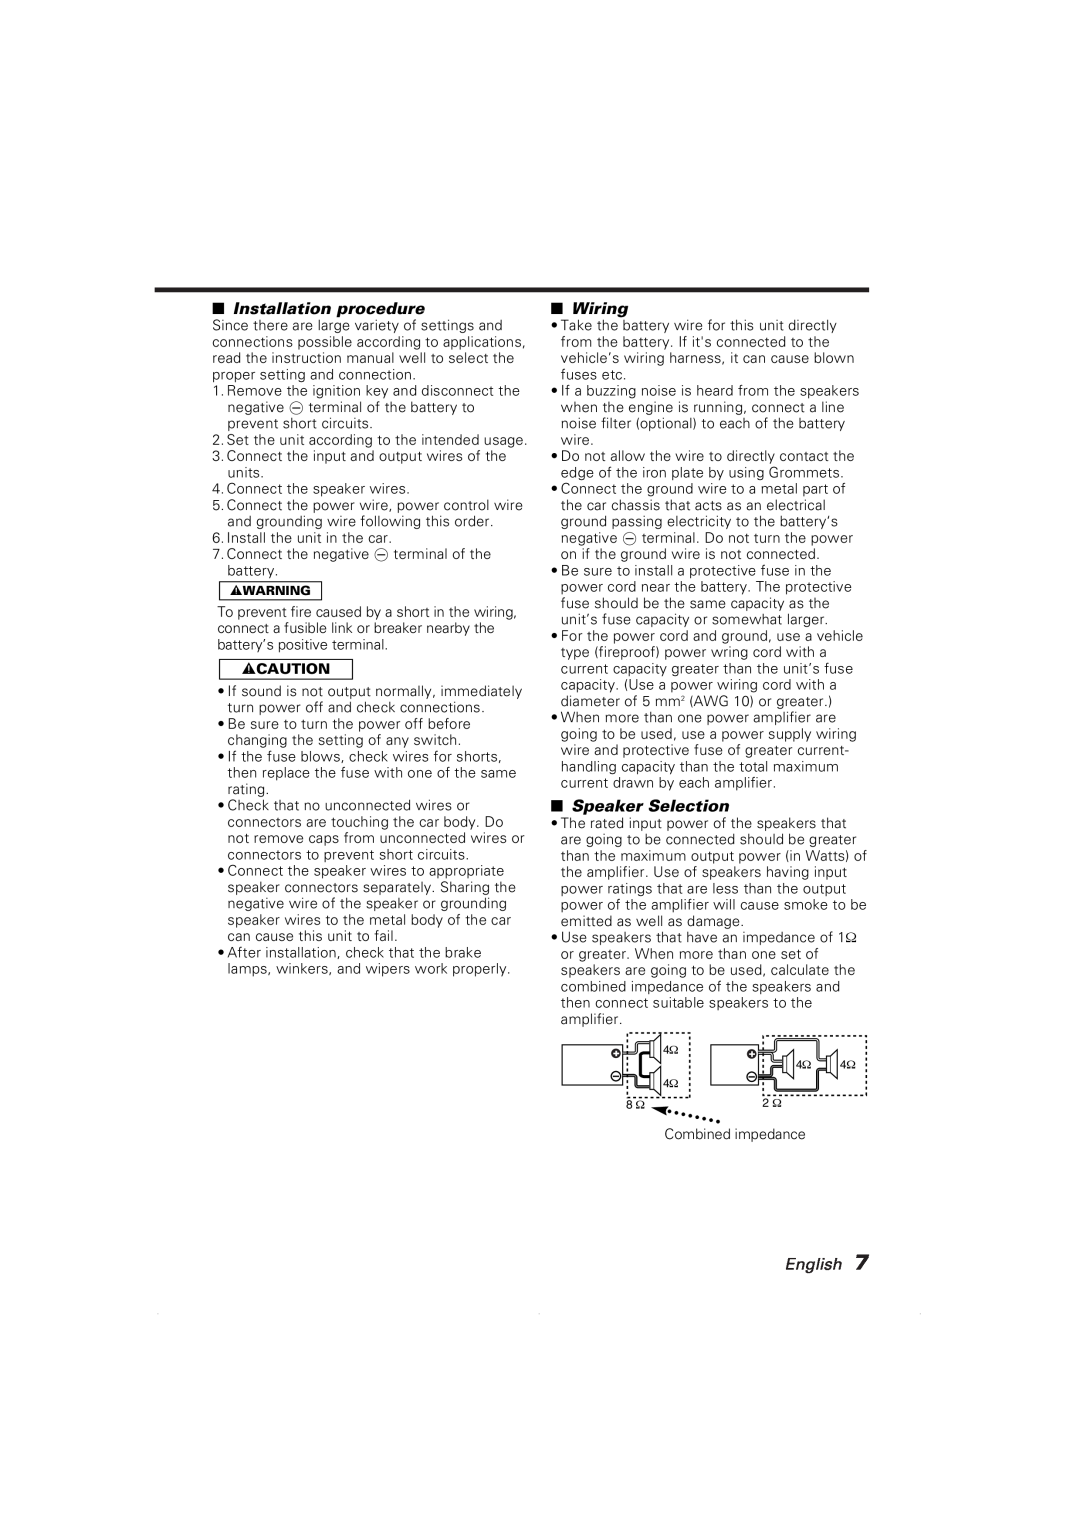 Kenwood KAC-8101D, KAC-8151D instruction manual Installation procedure, Wiring, Speaker Selection, English, 2CAUTION 